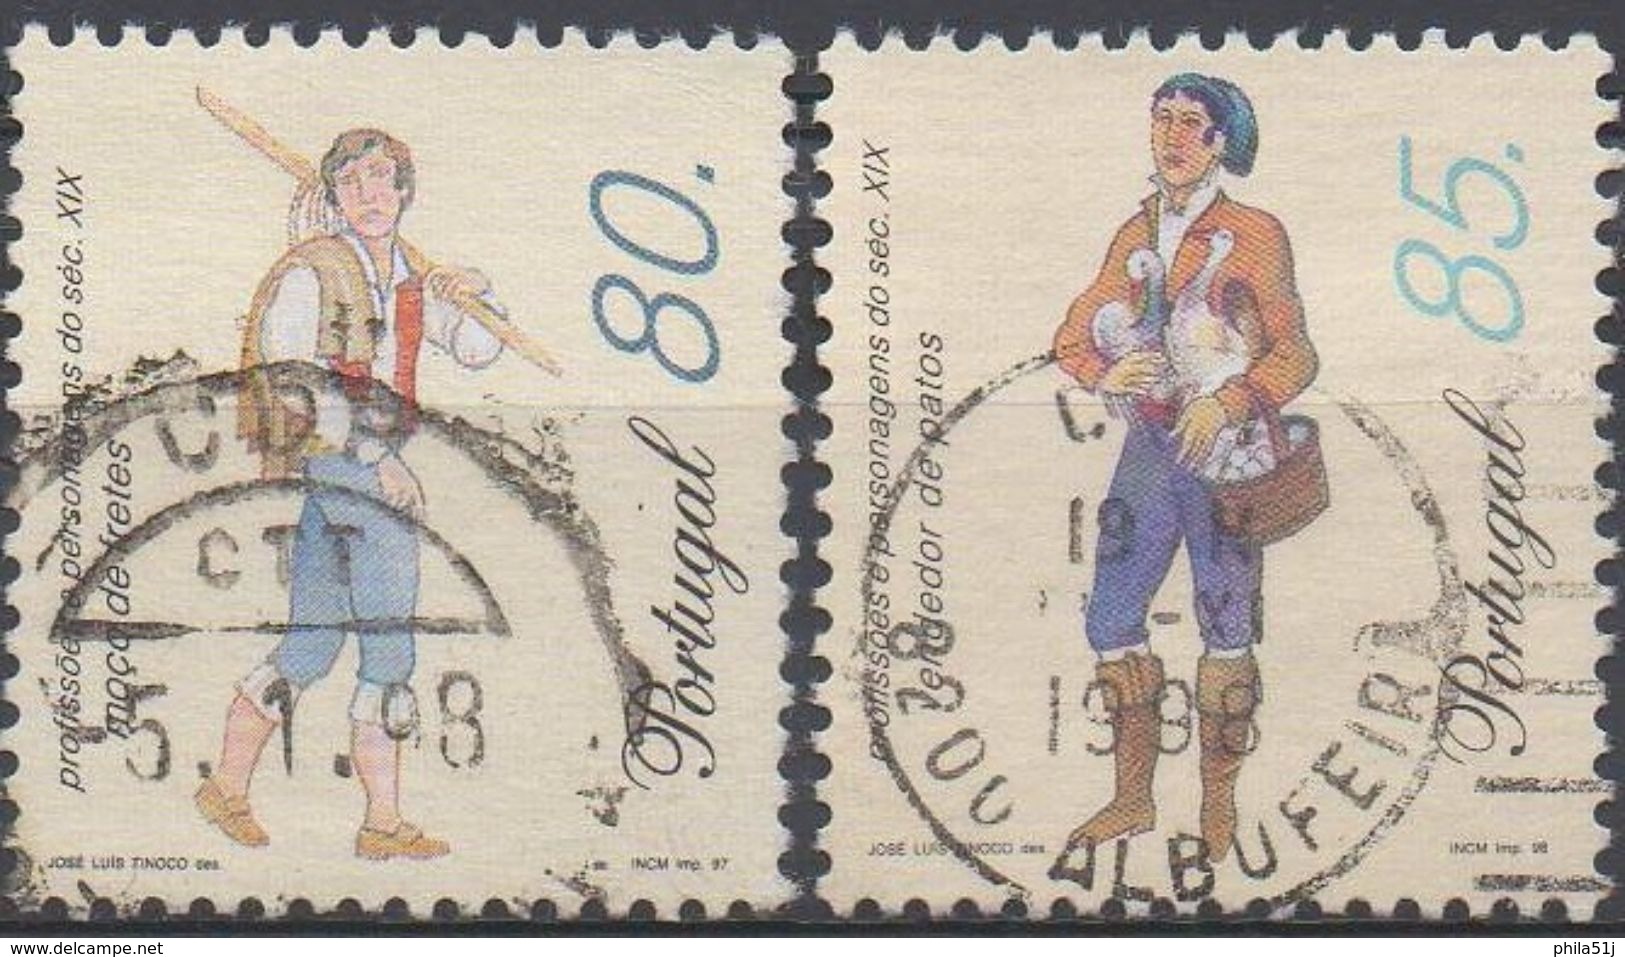 PORTUGAL  N°2160/2219__OBL VOIR SCAN - Used Stamps